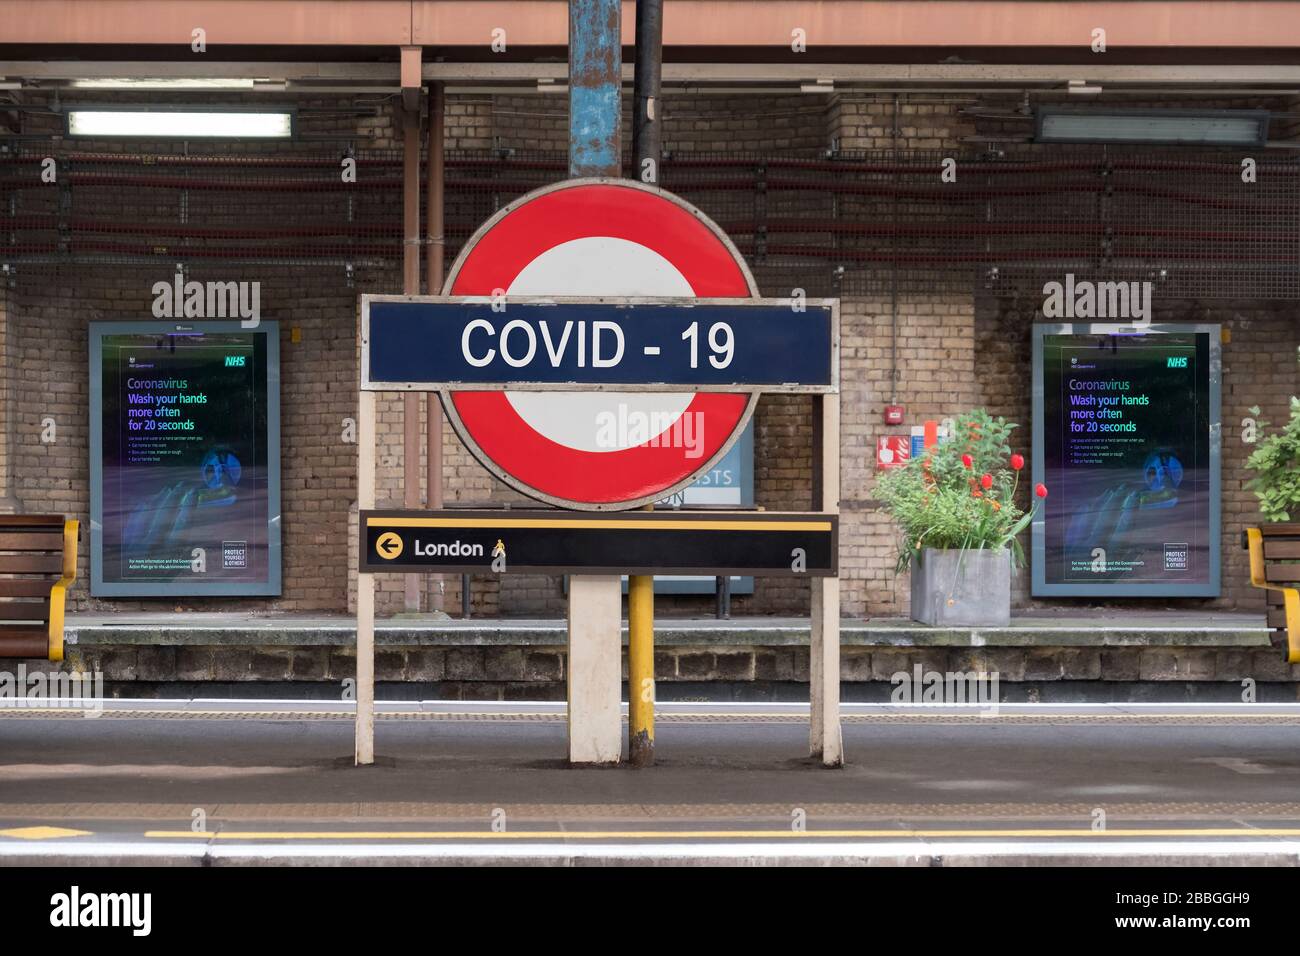 Coronavirus Covid-19, Illustration de l'éclosion, London Underground System, Londres, Angleterre, Royaume-Uni Banque D'Images